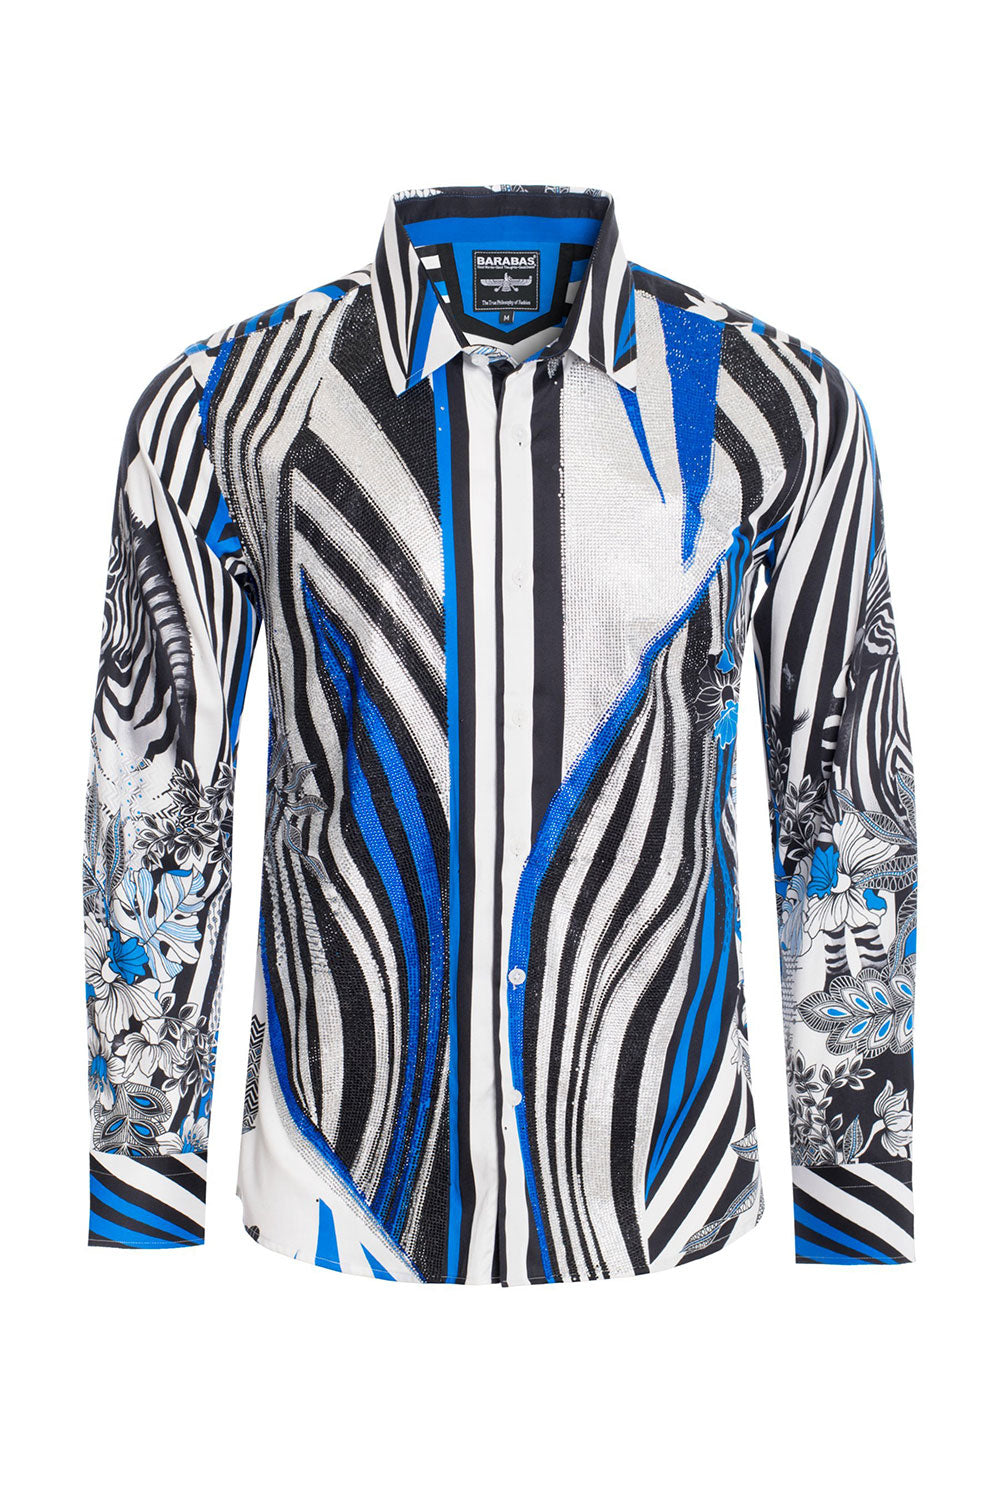 BARABAS Men's Zebra Printed Rhinestone Long Sleeve Shirts SPR206